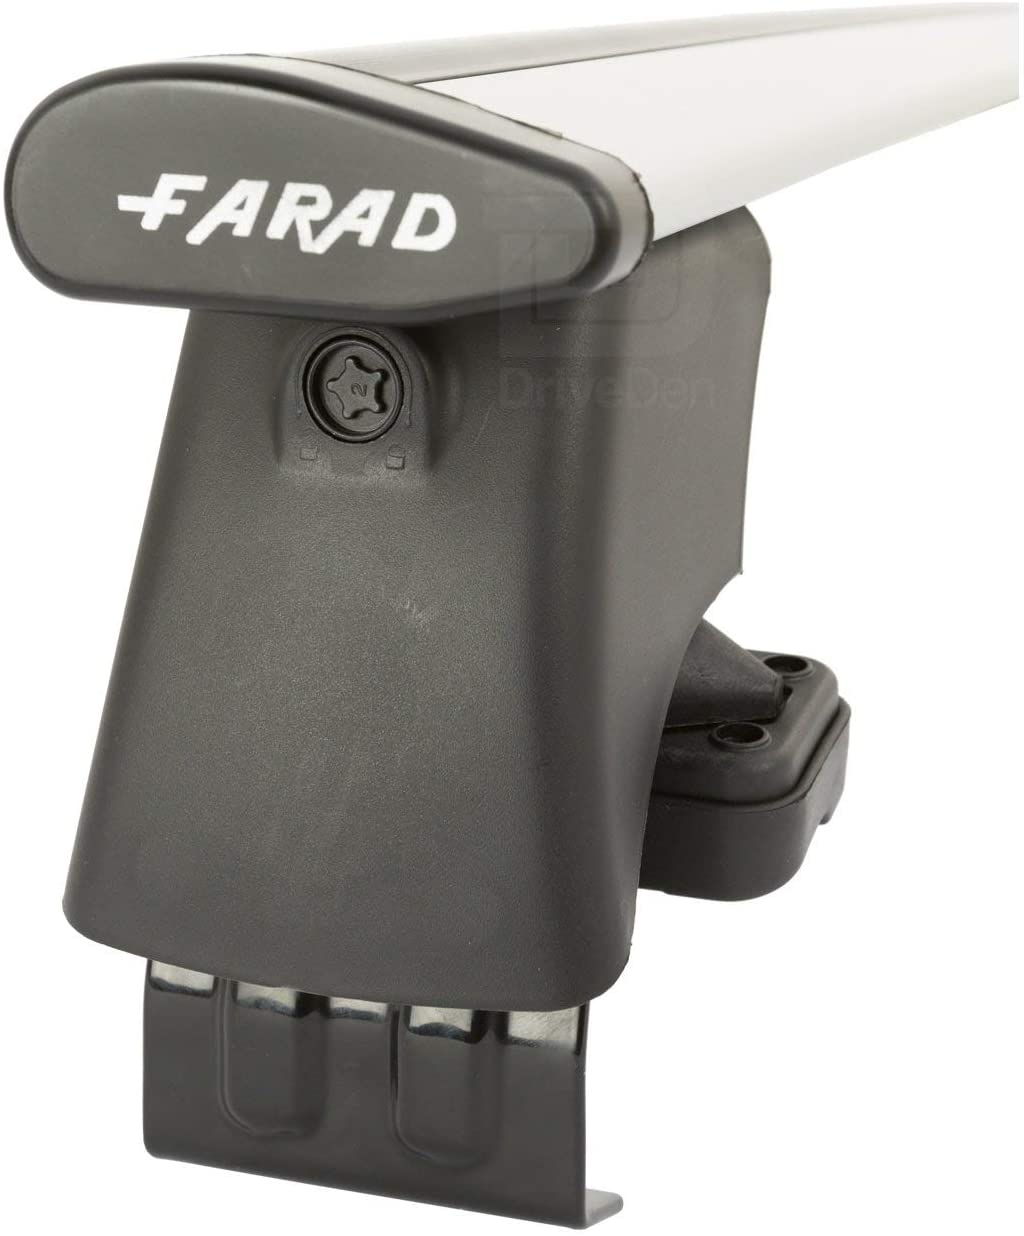 FARAD-Kit H2 per barre portatutto - Daewoo Matiz 2005-2009 (senza corrimano)